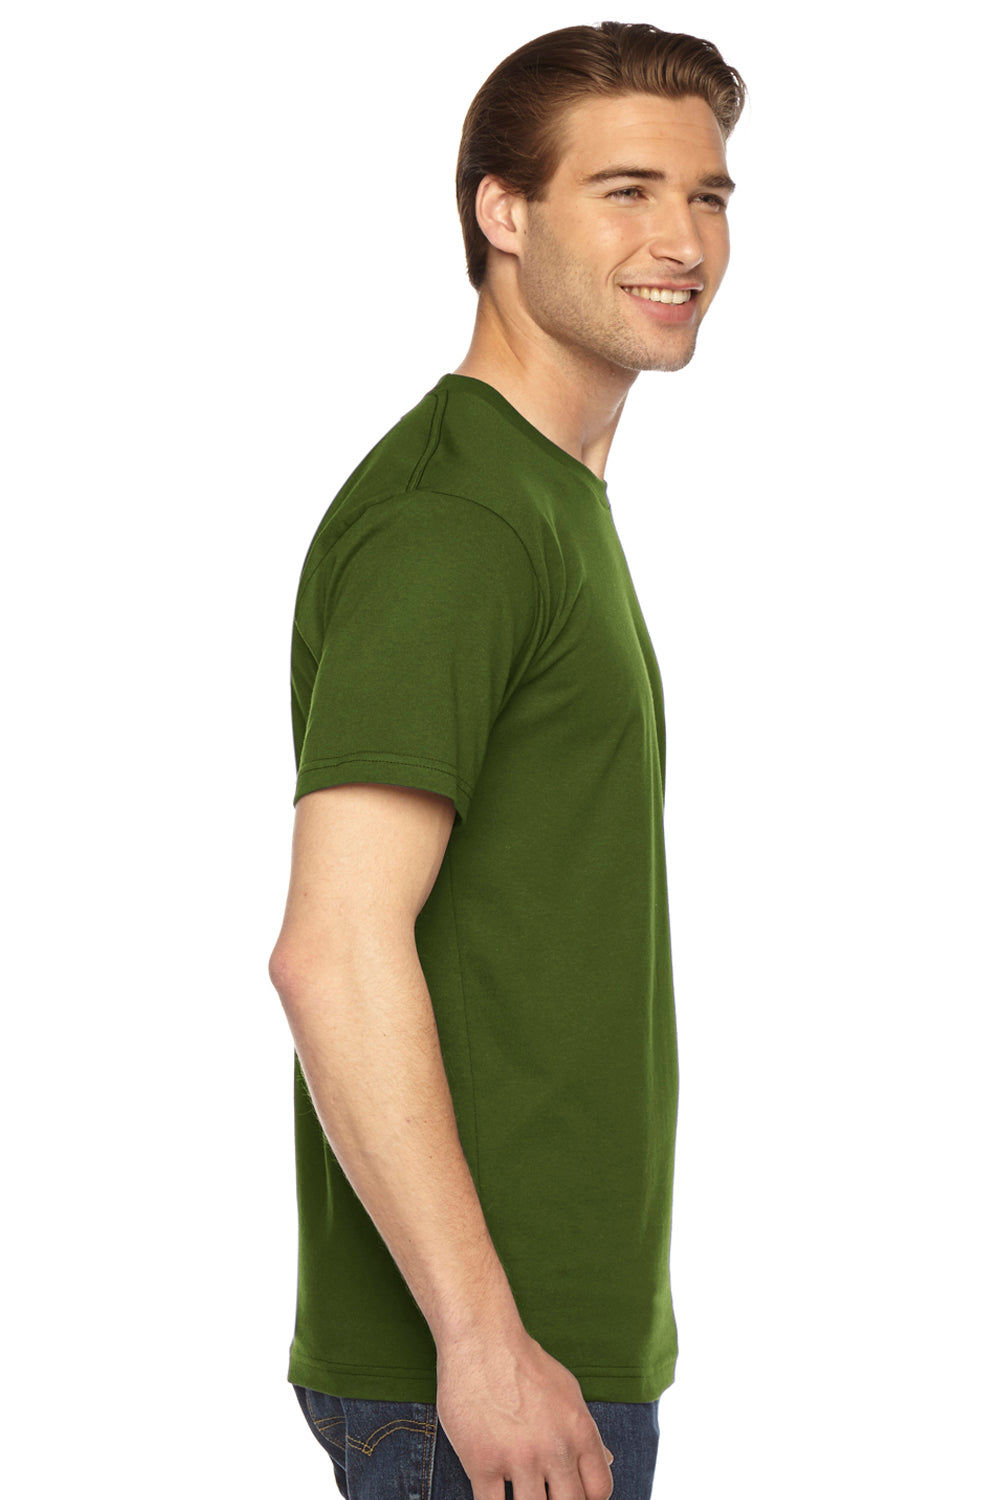 American Apparel 2001 Mens Fine Jersey Short Sleeve Crewneck T-Shirt Olive Green Model Side